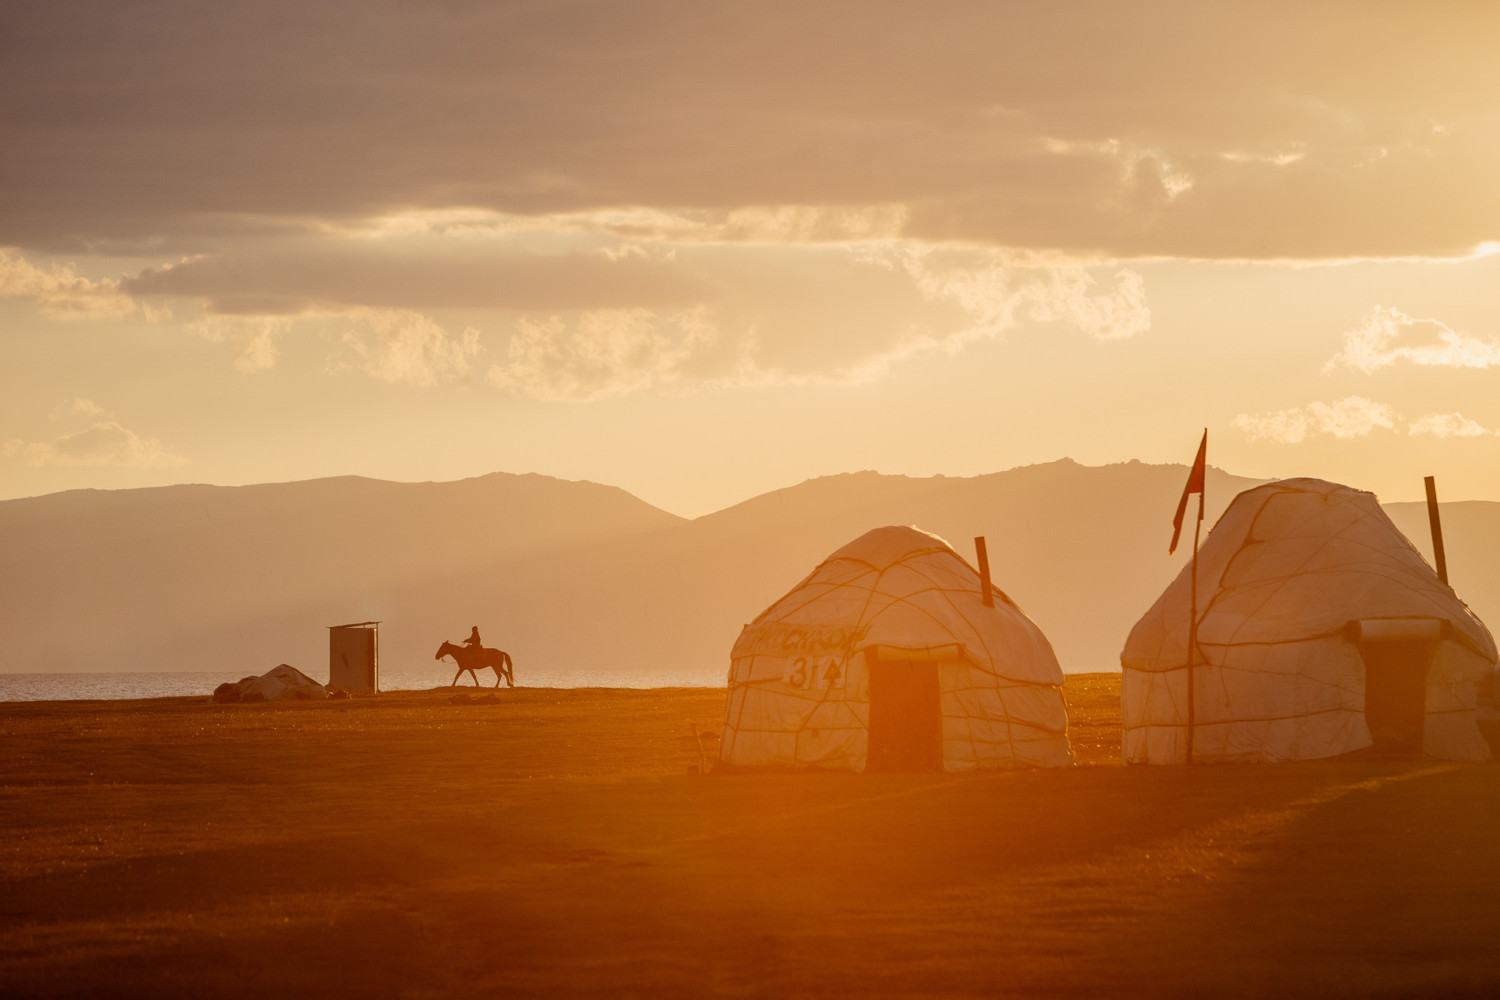 A man rides his horse as the sun sets in Kyrgyzstan.